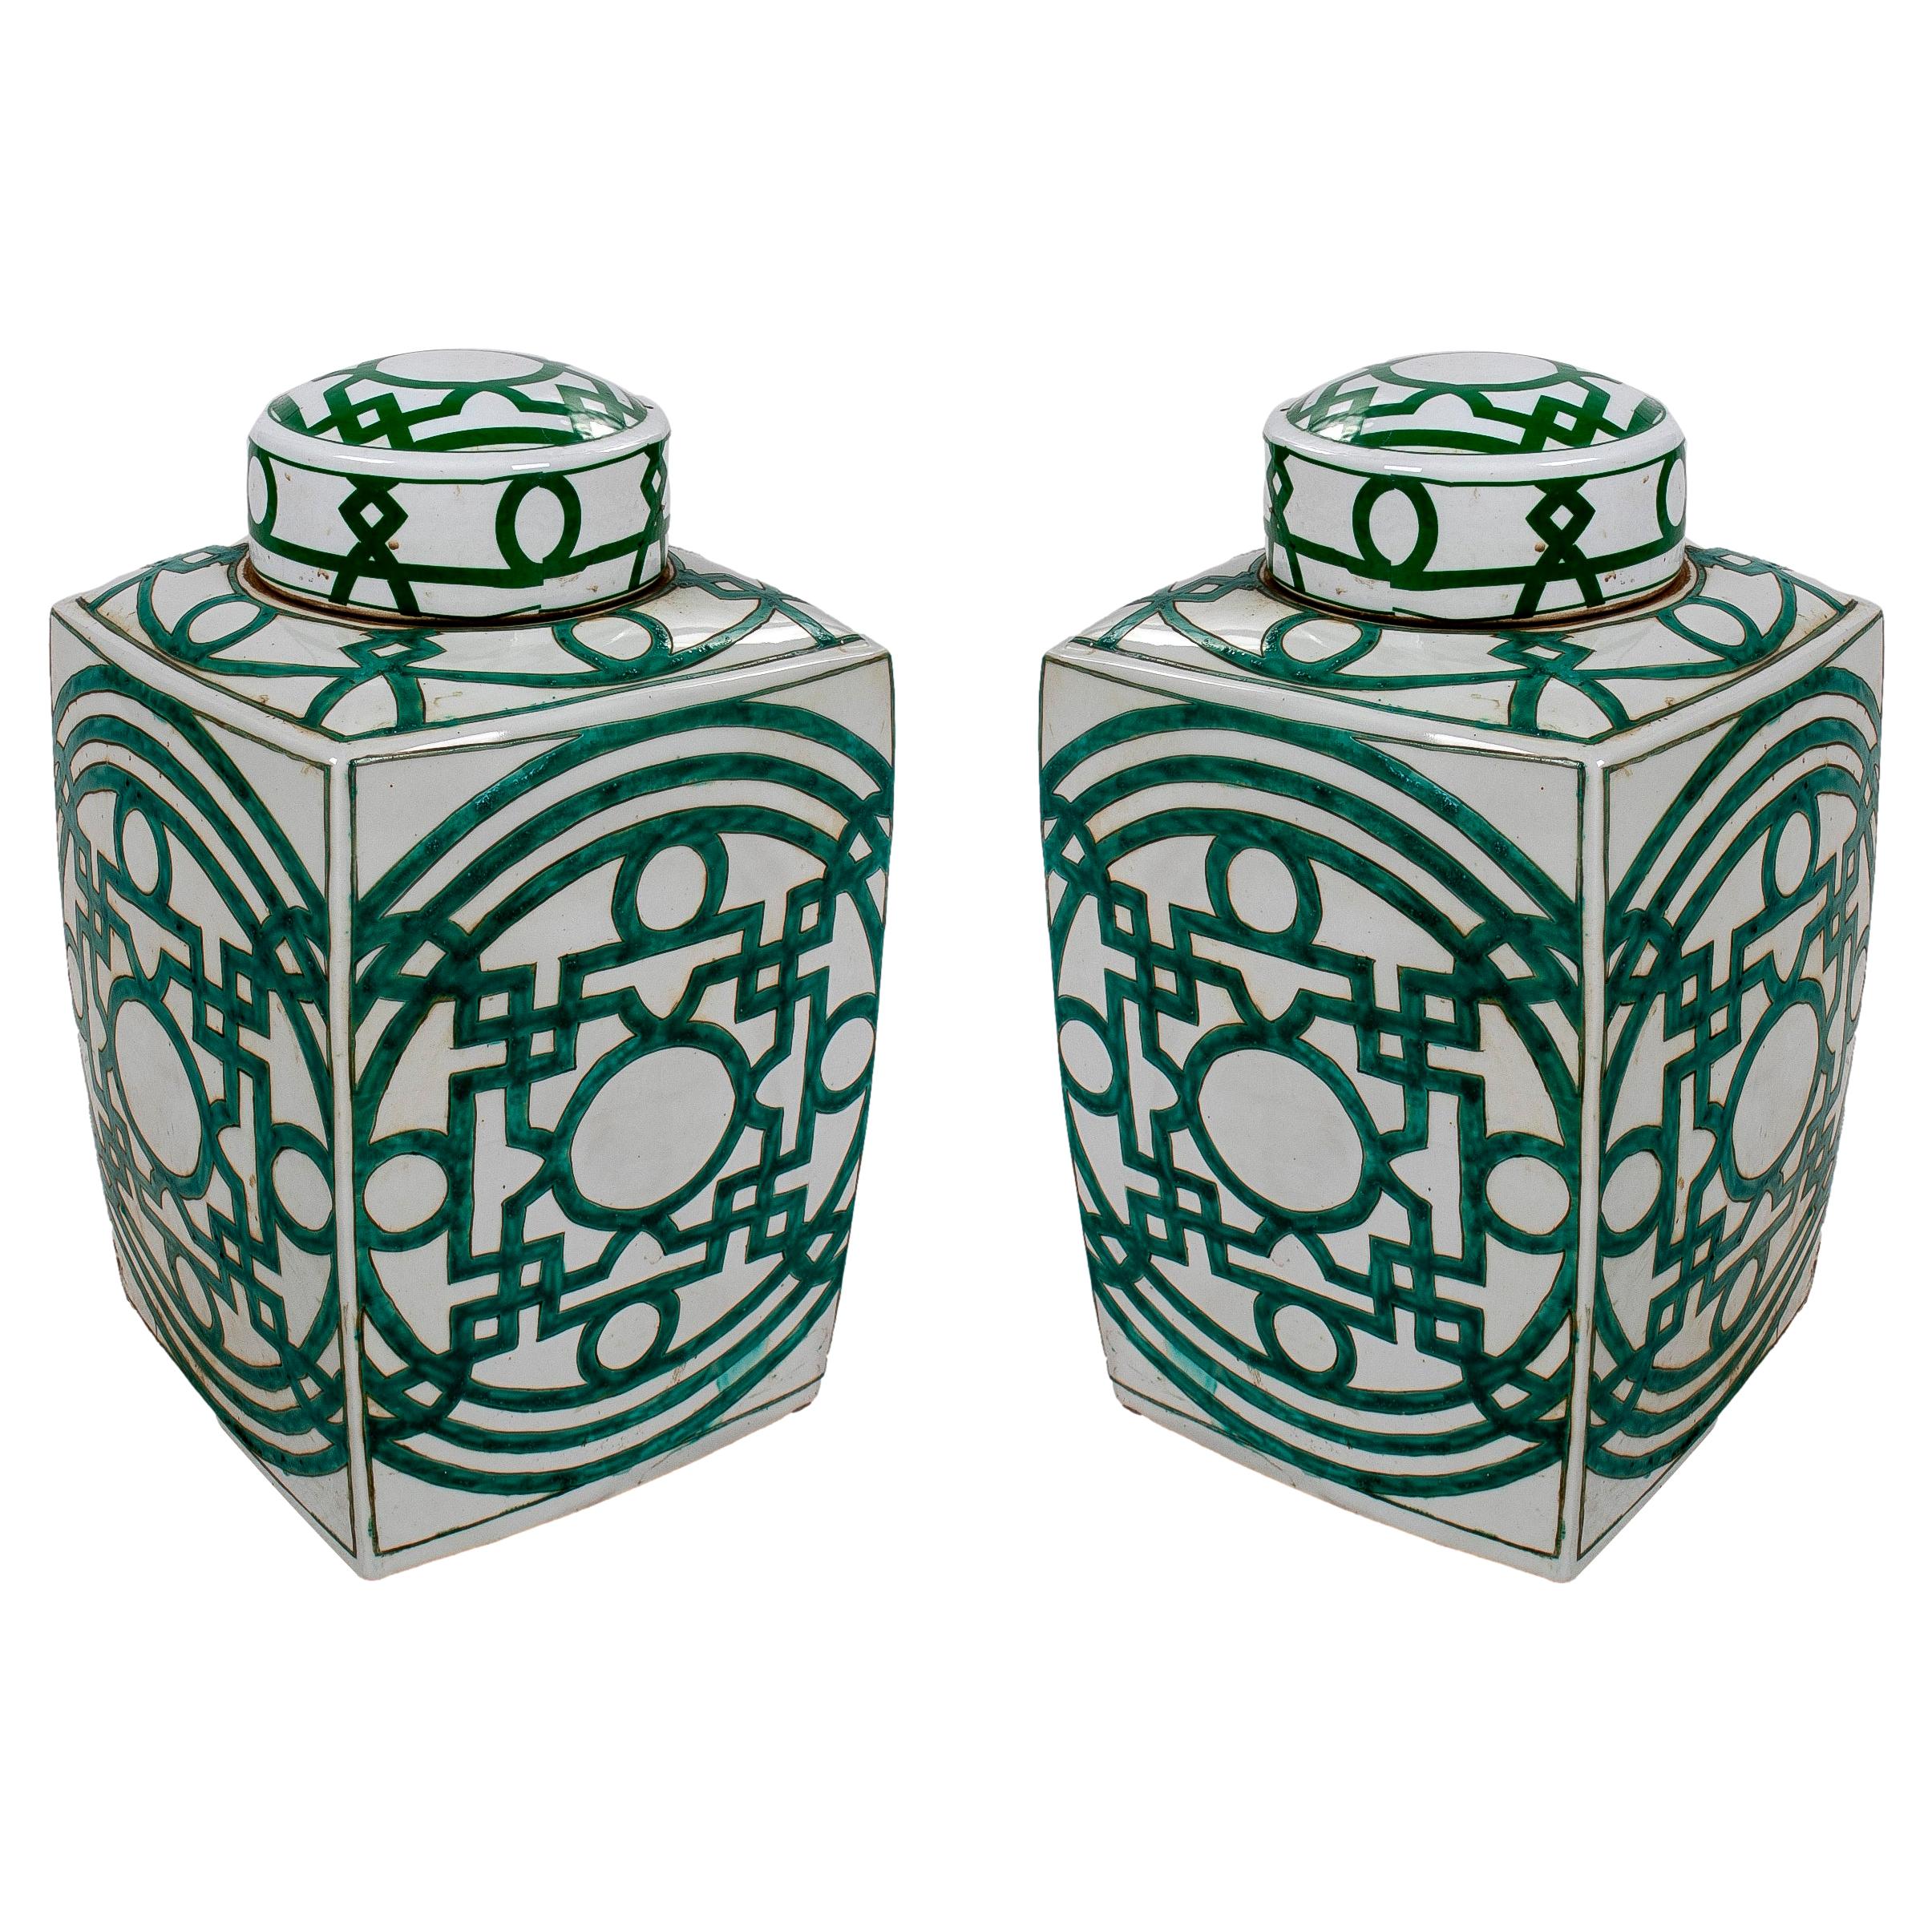 Pair of Asian White Glazed Porcelain Urns w/ Green Geometric Decorations & Lids